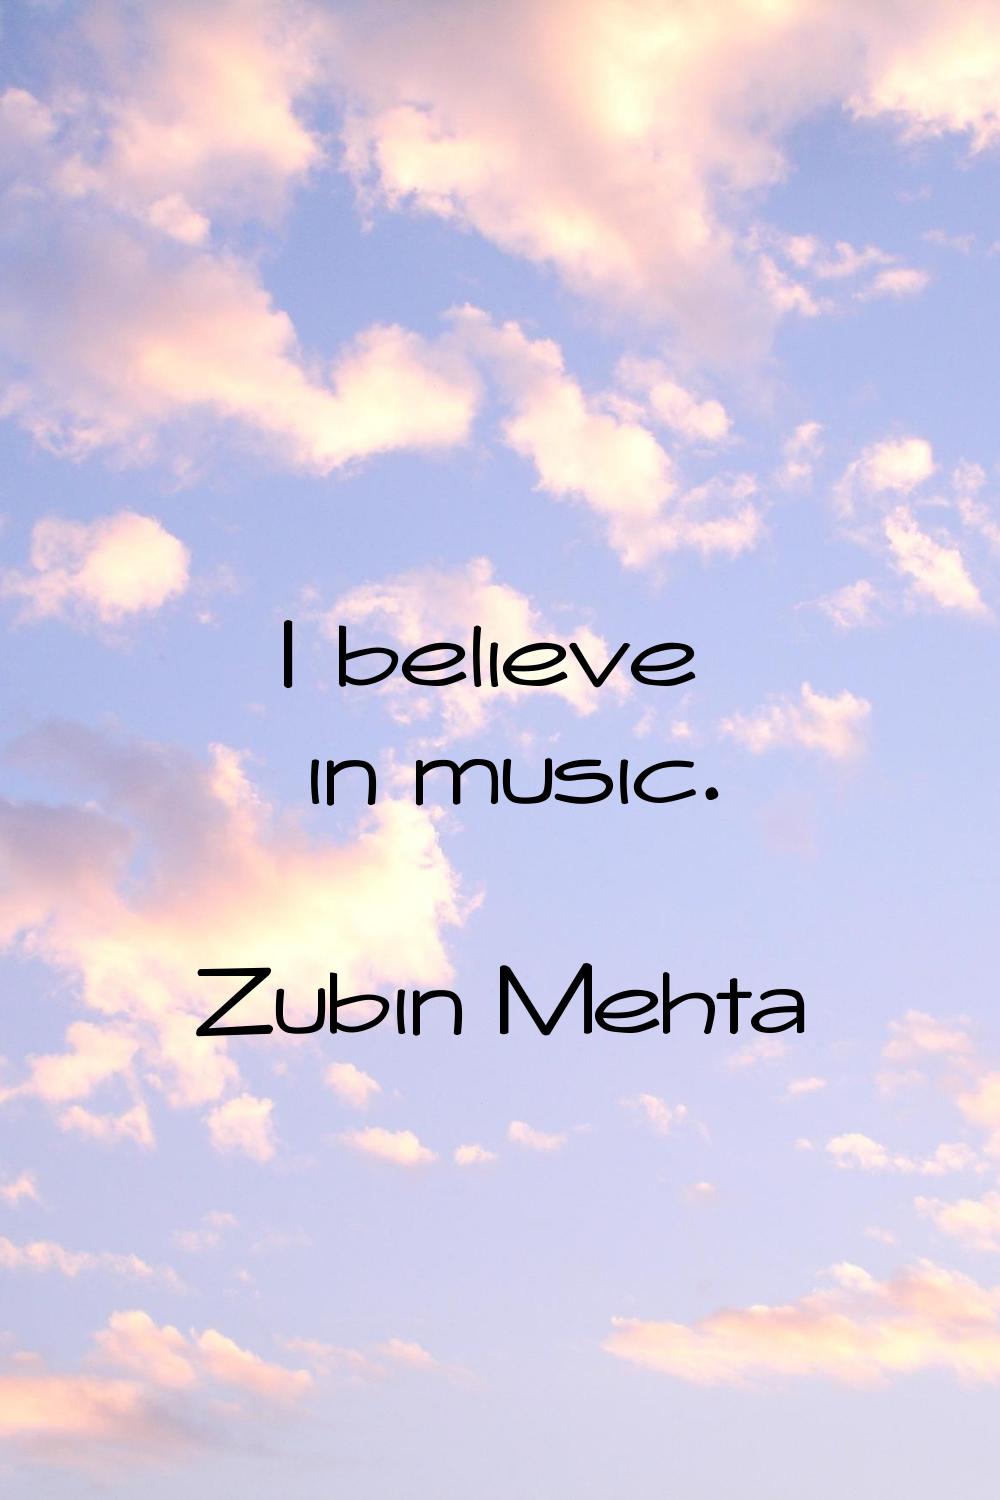 I believe in music.